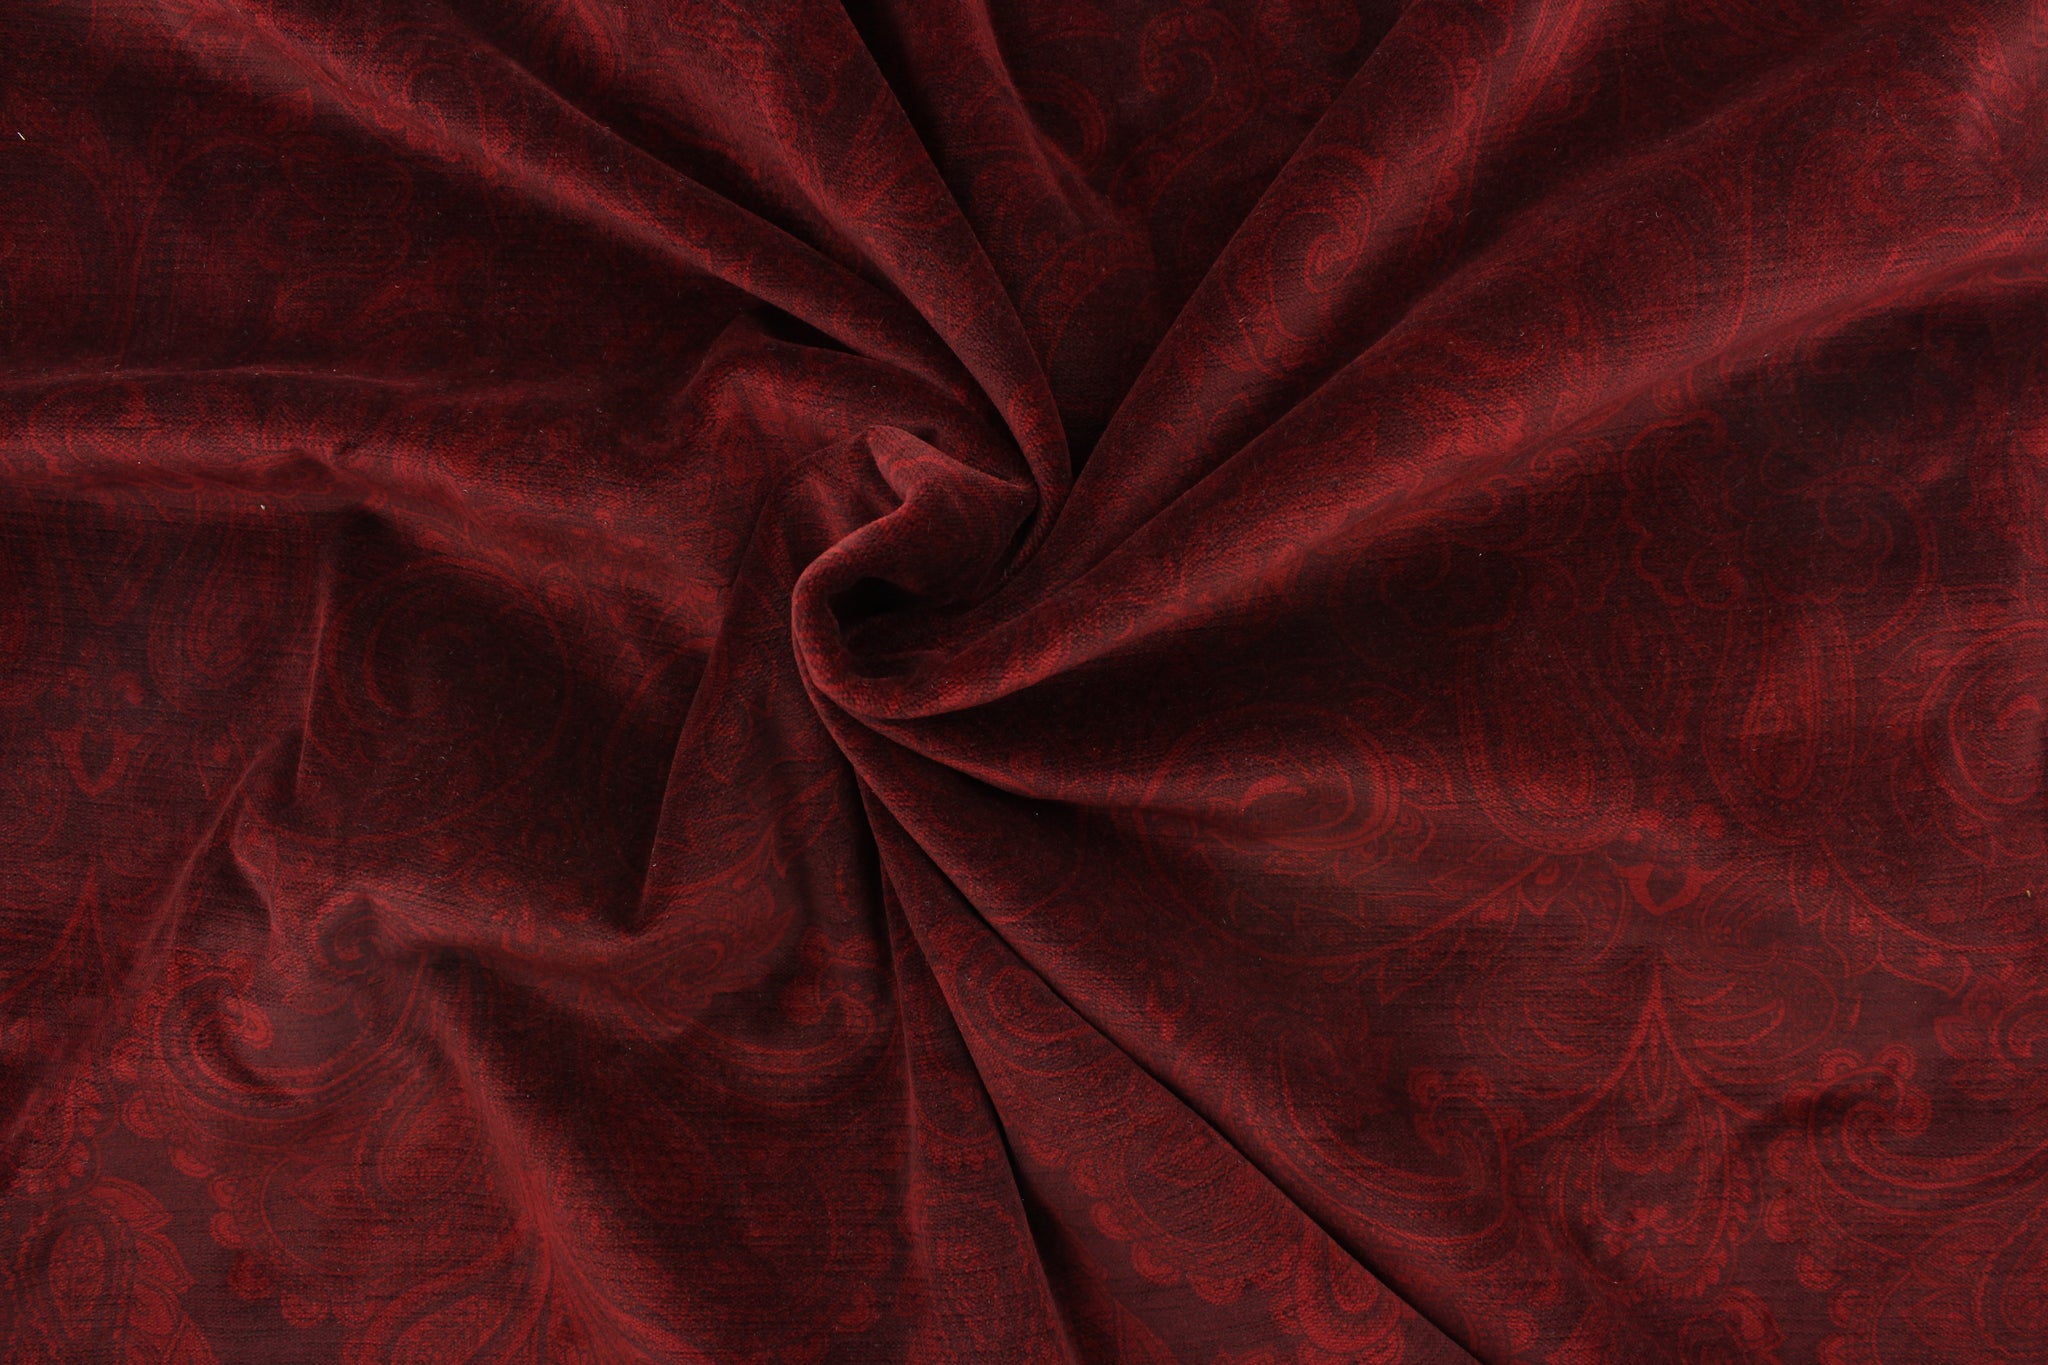 Burgundy, Solid Plain Upholstery Velvet Fabric By The Yard